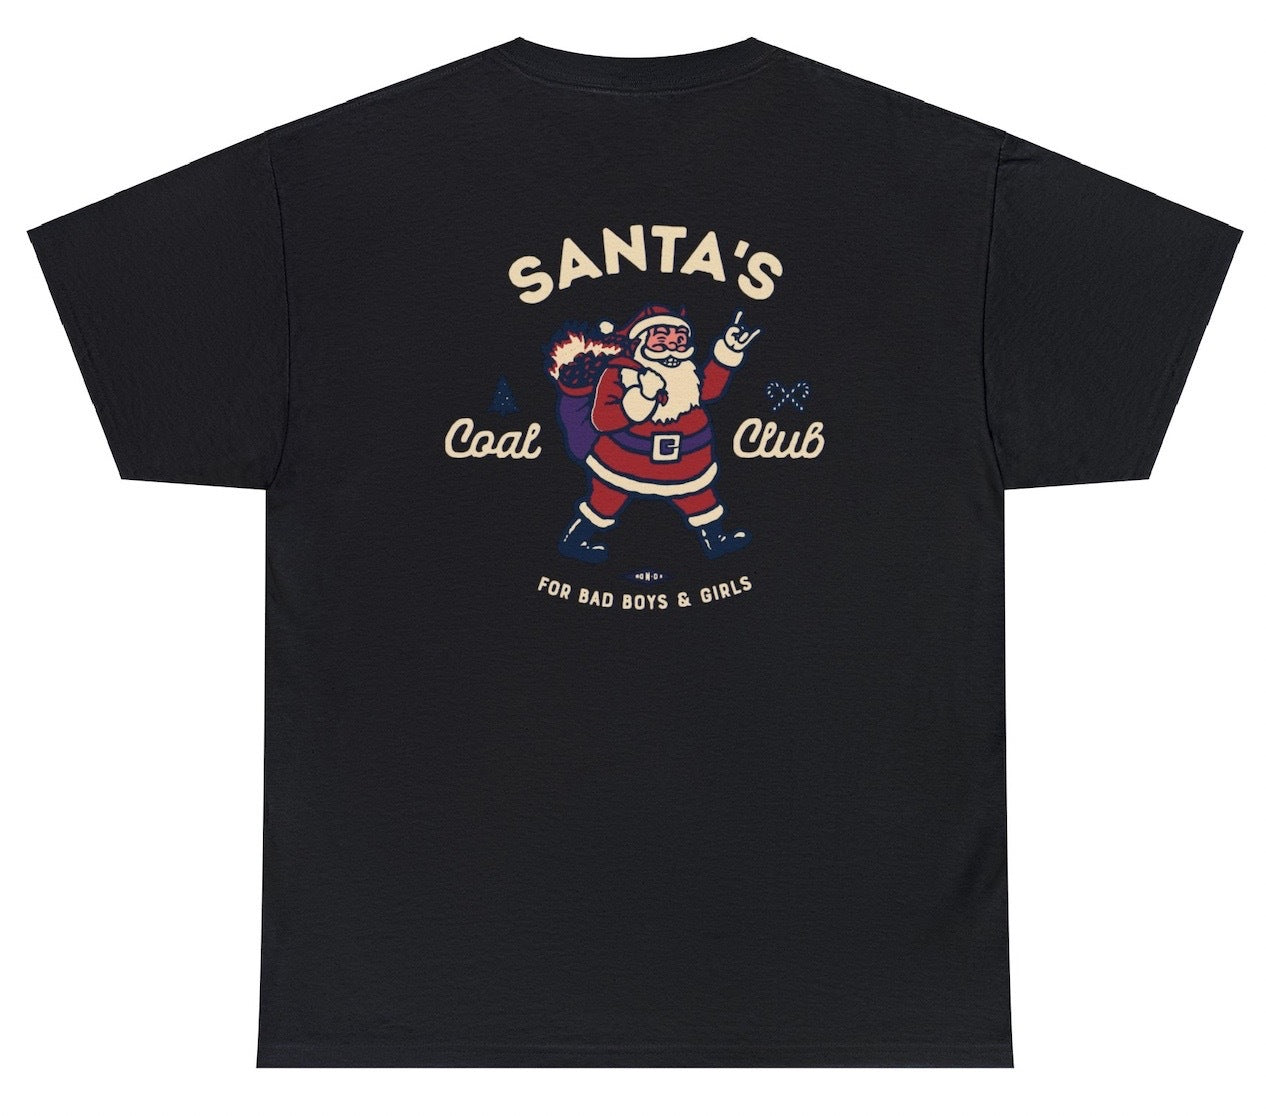 Santa's Coal Club Tee